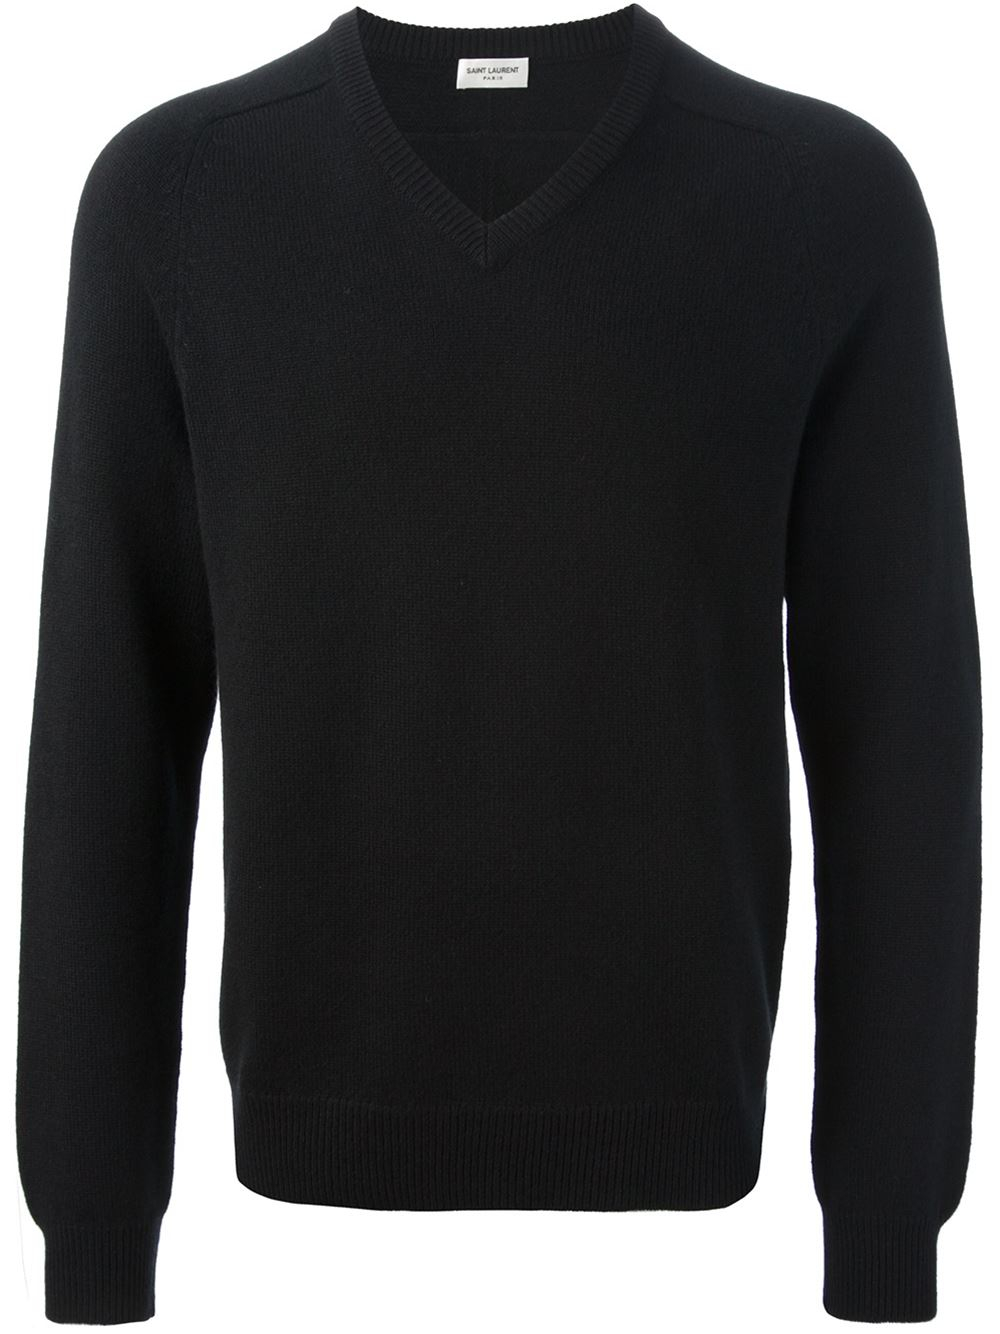 Lyst - Saint Laurent Vneck Sweater in Black for Men